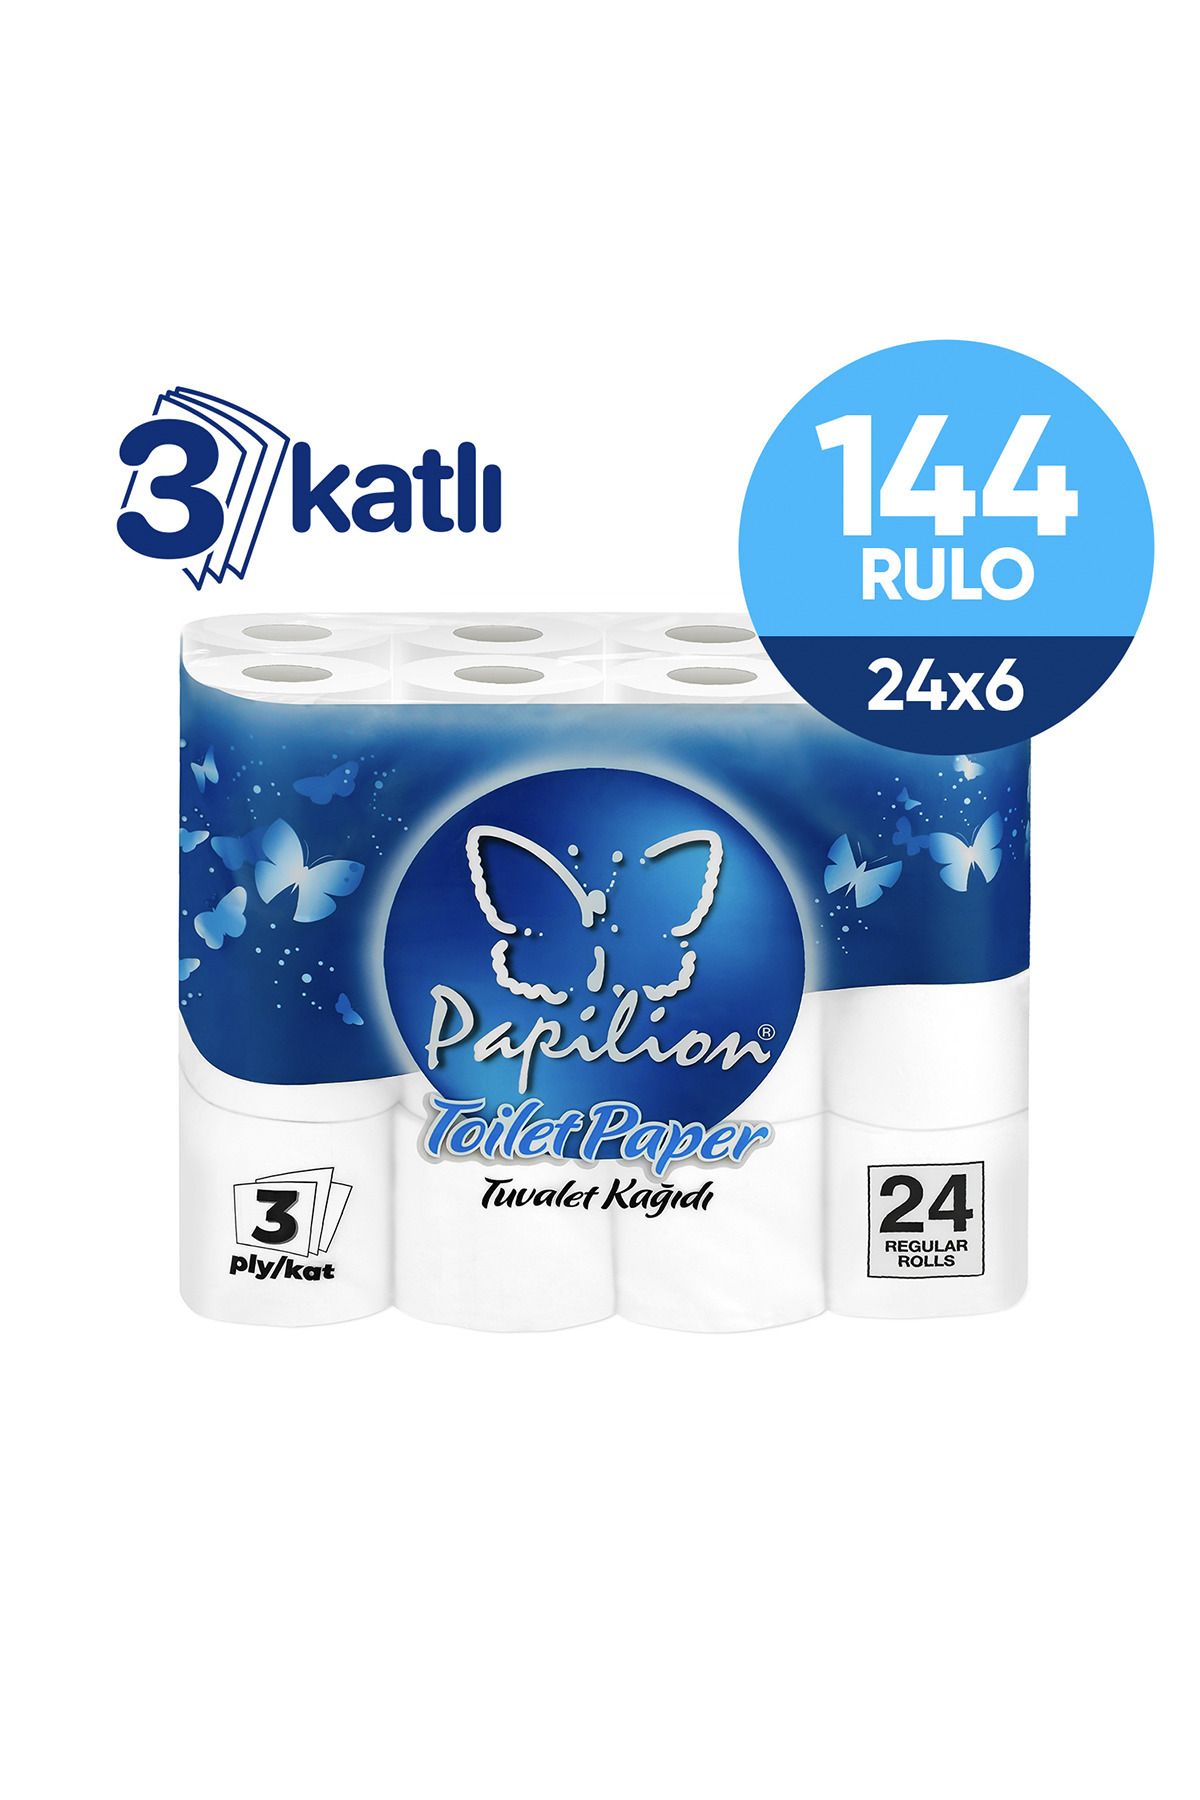 Papilion Extra-soft 3 Katlı Tuvalet Kağıdı 24x6 - 144 Rulo